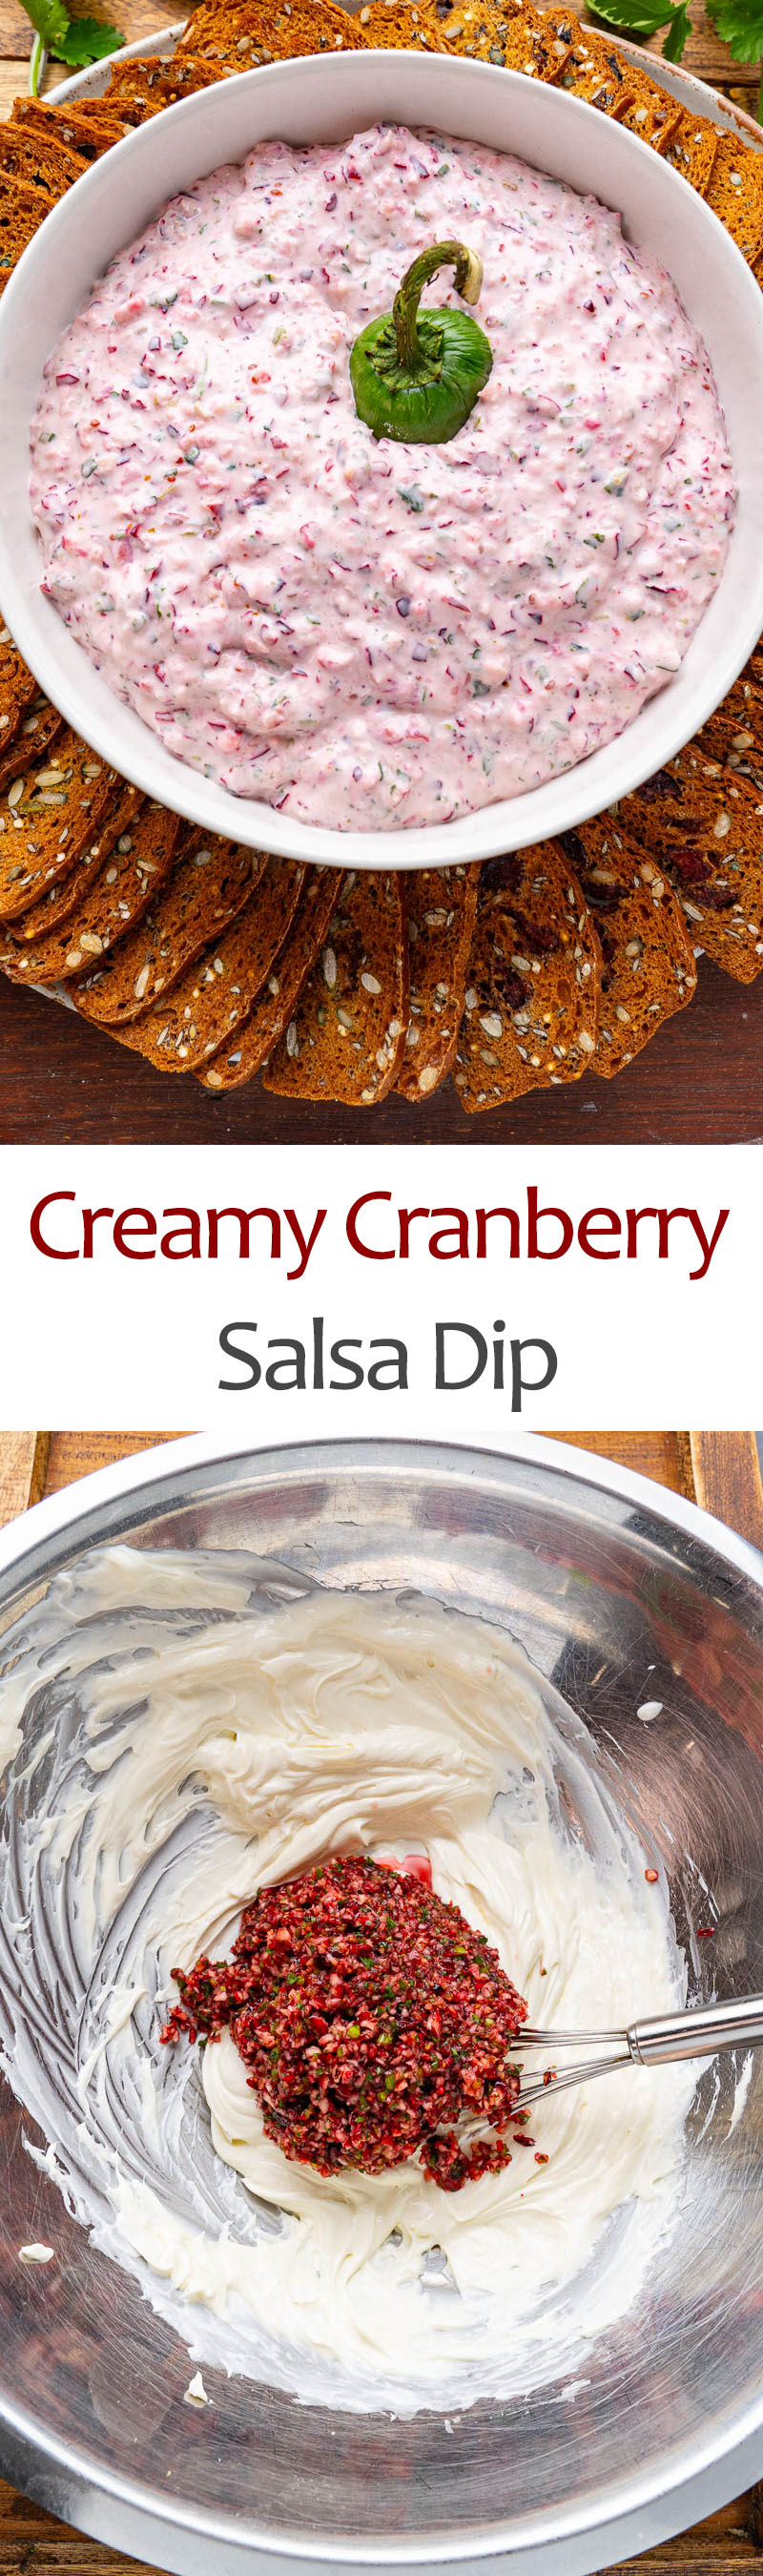 Creamy Cranberry Salsa Dip